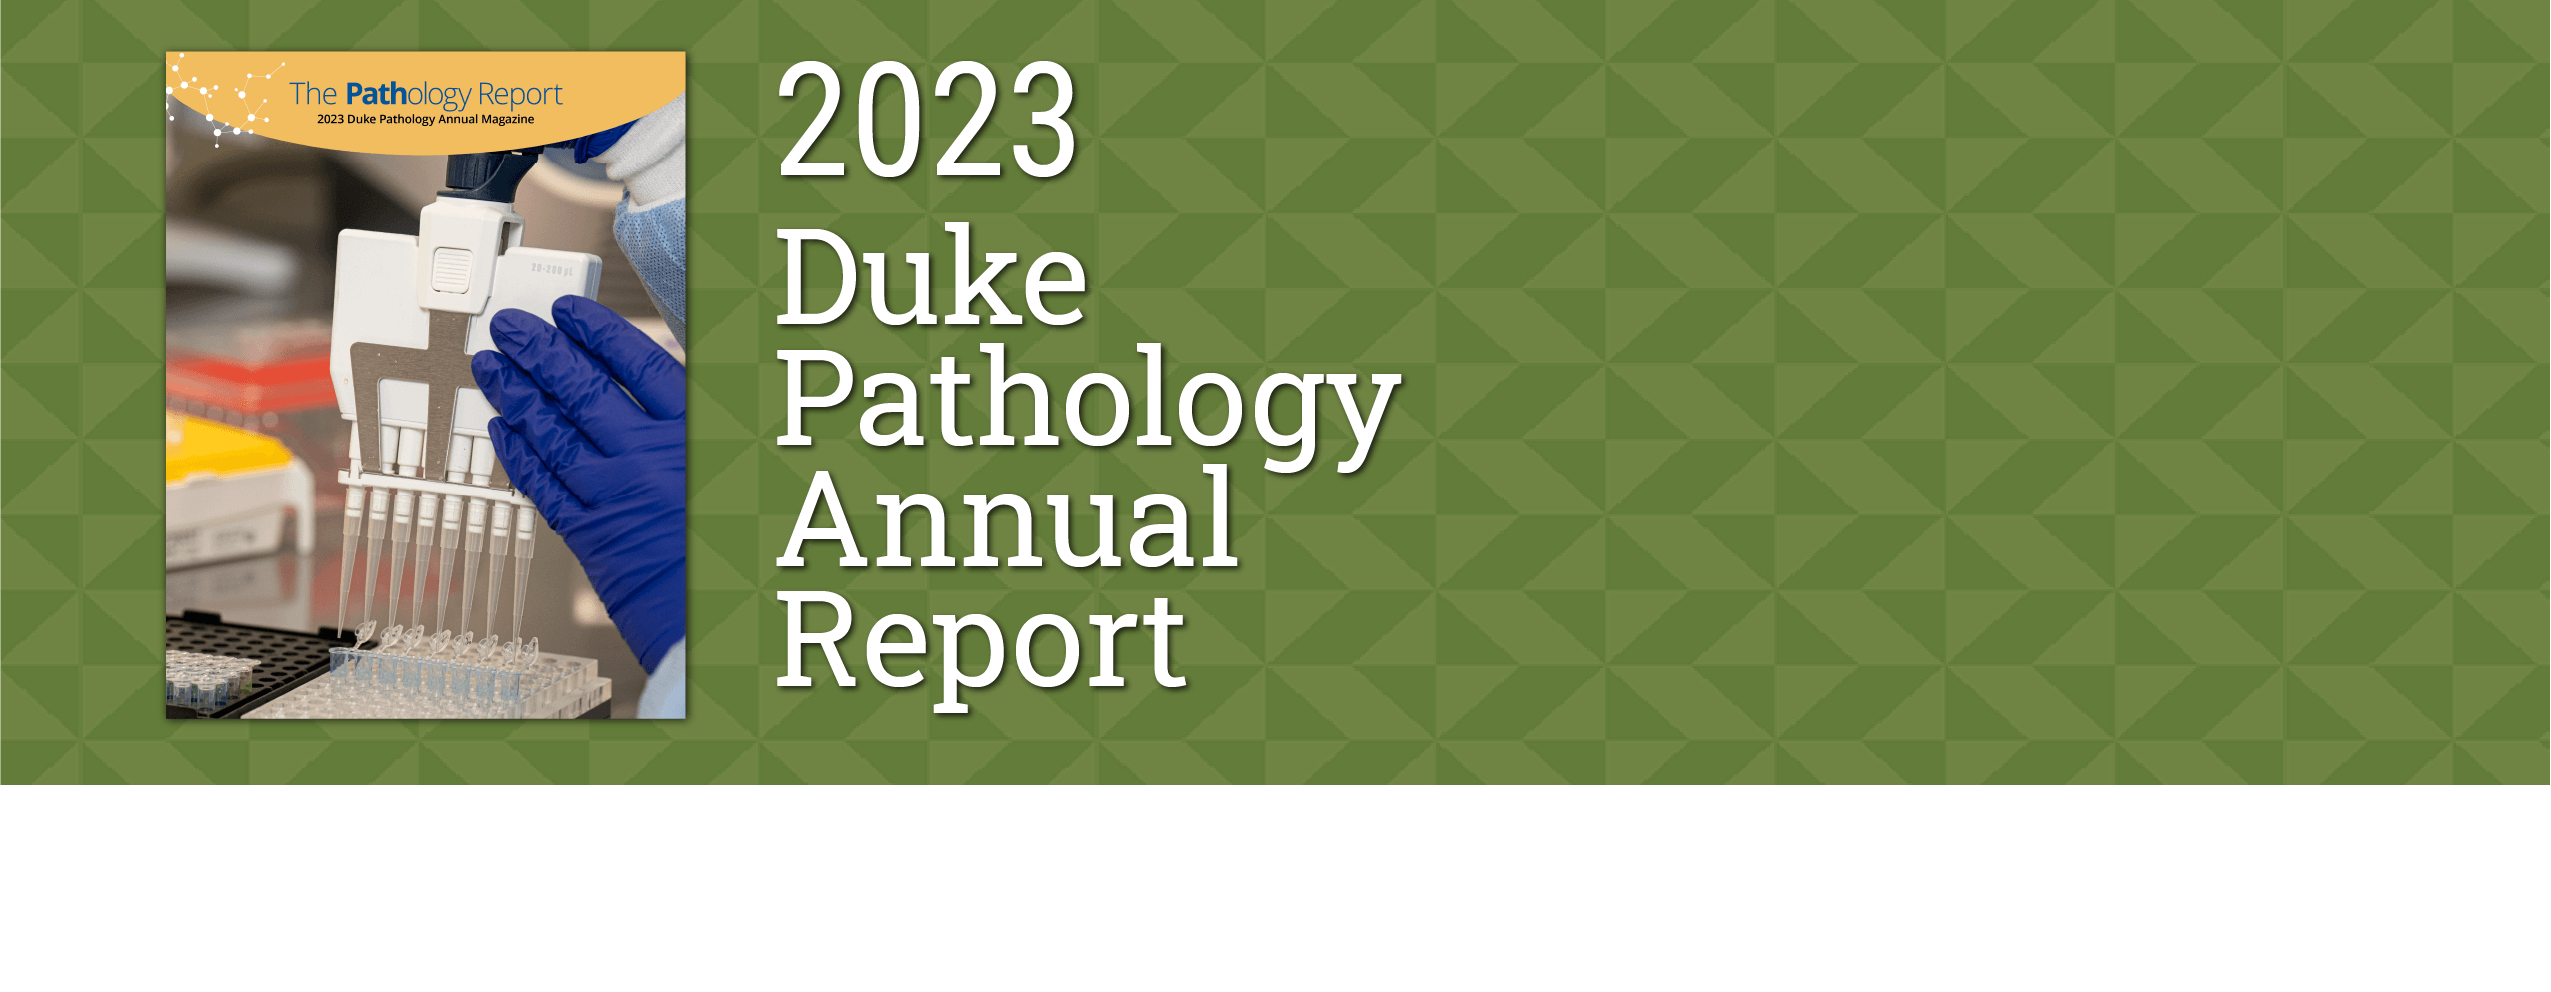 2023 Duke Pathology Annual Report